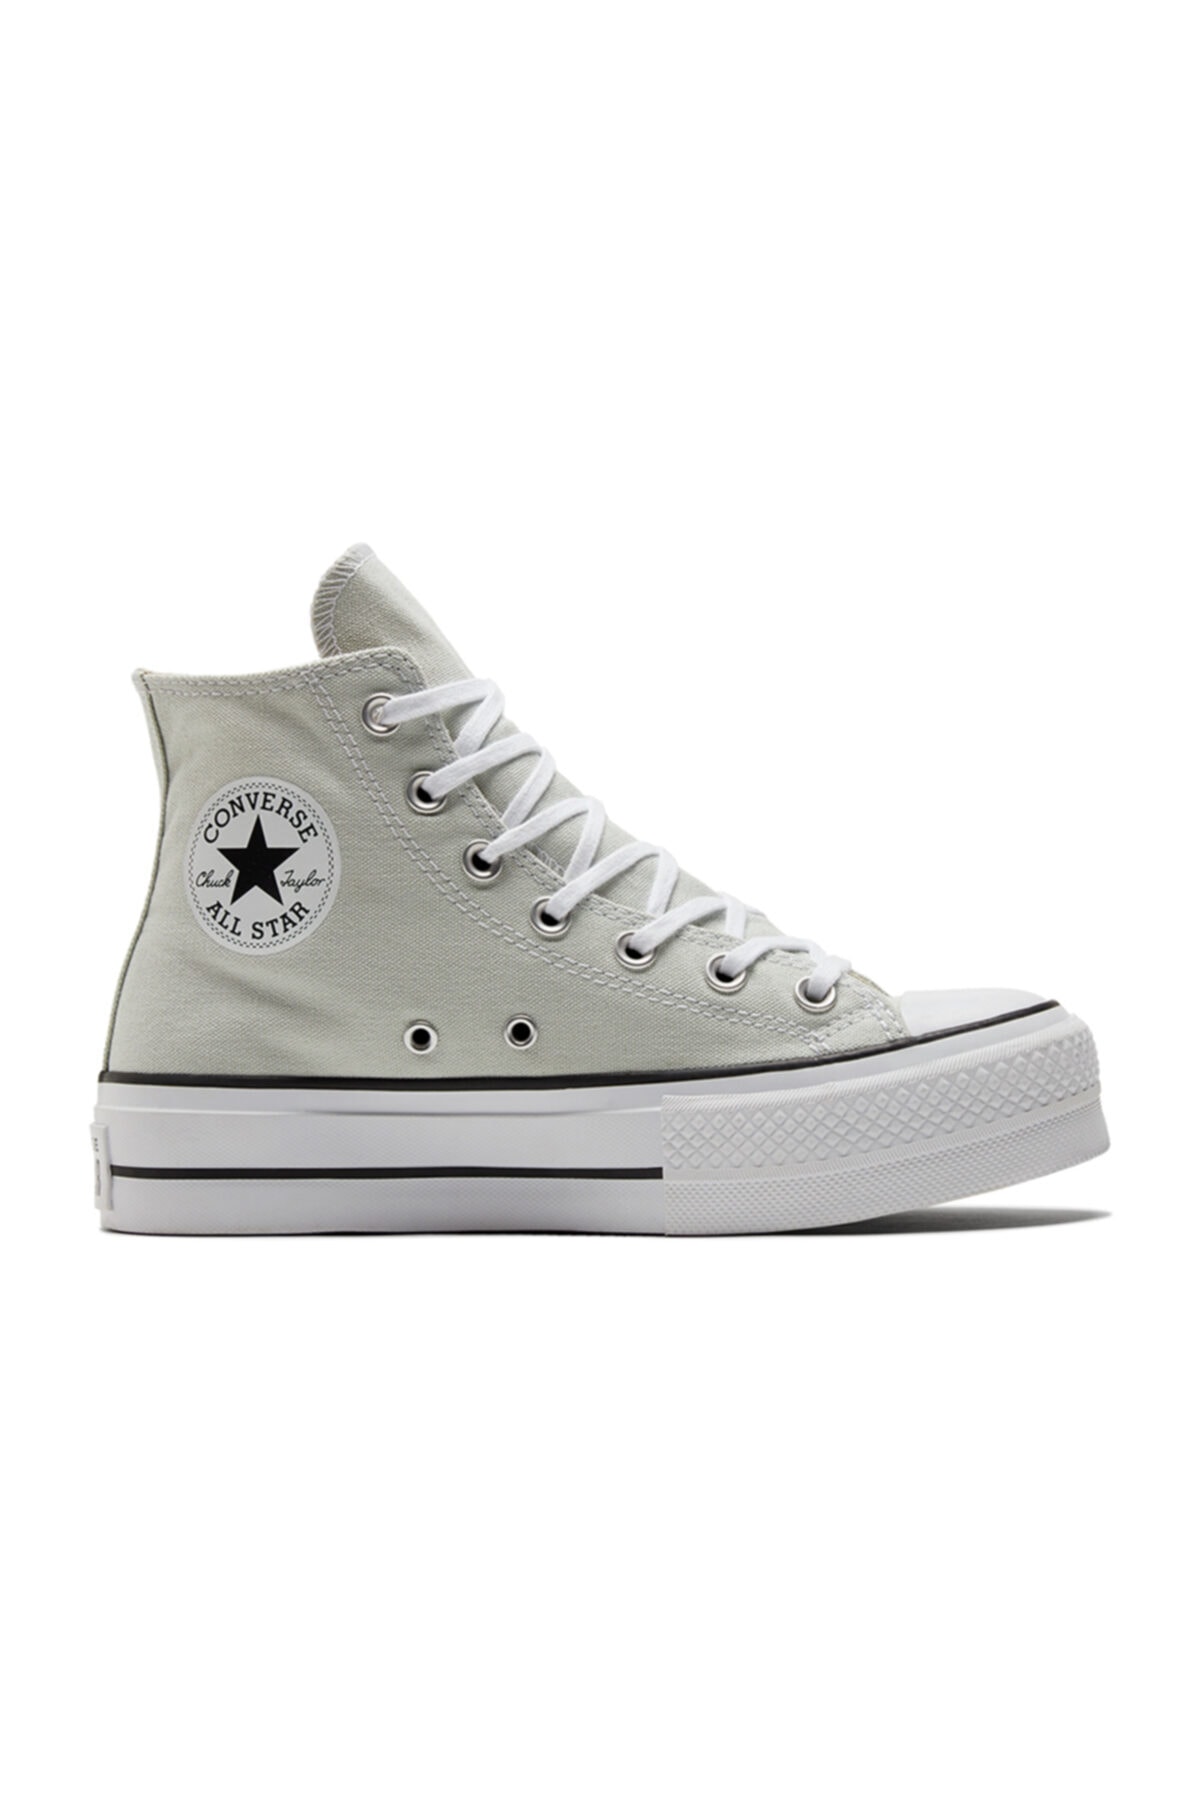 converse Kadın / Kız Sneaker 572720c Chuck Taylor All Star Lıft Canvas Platform Gumus/sıyah/beyaz K